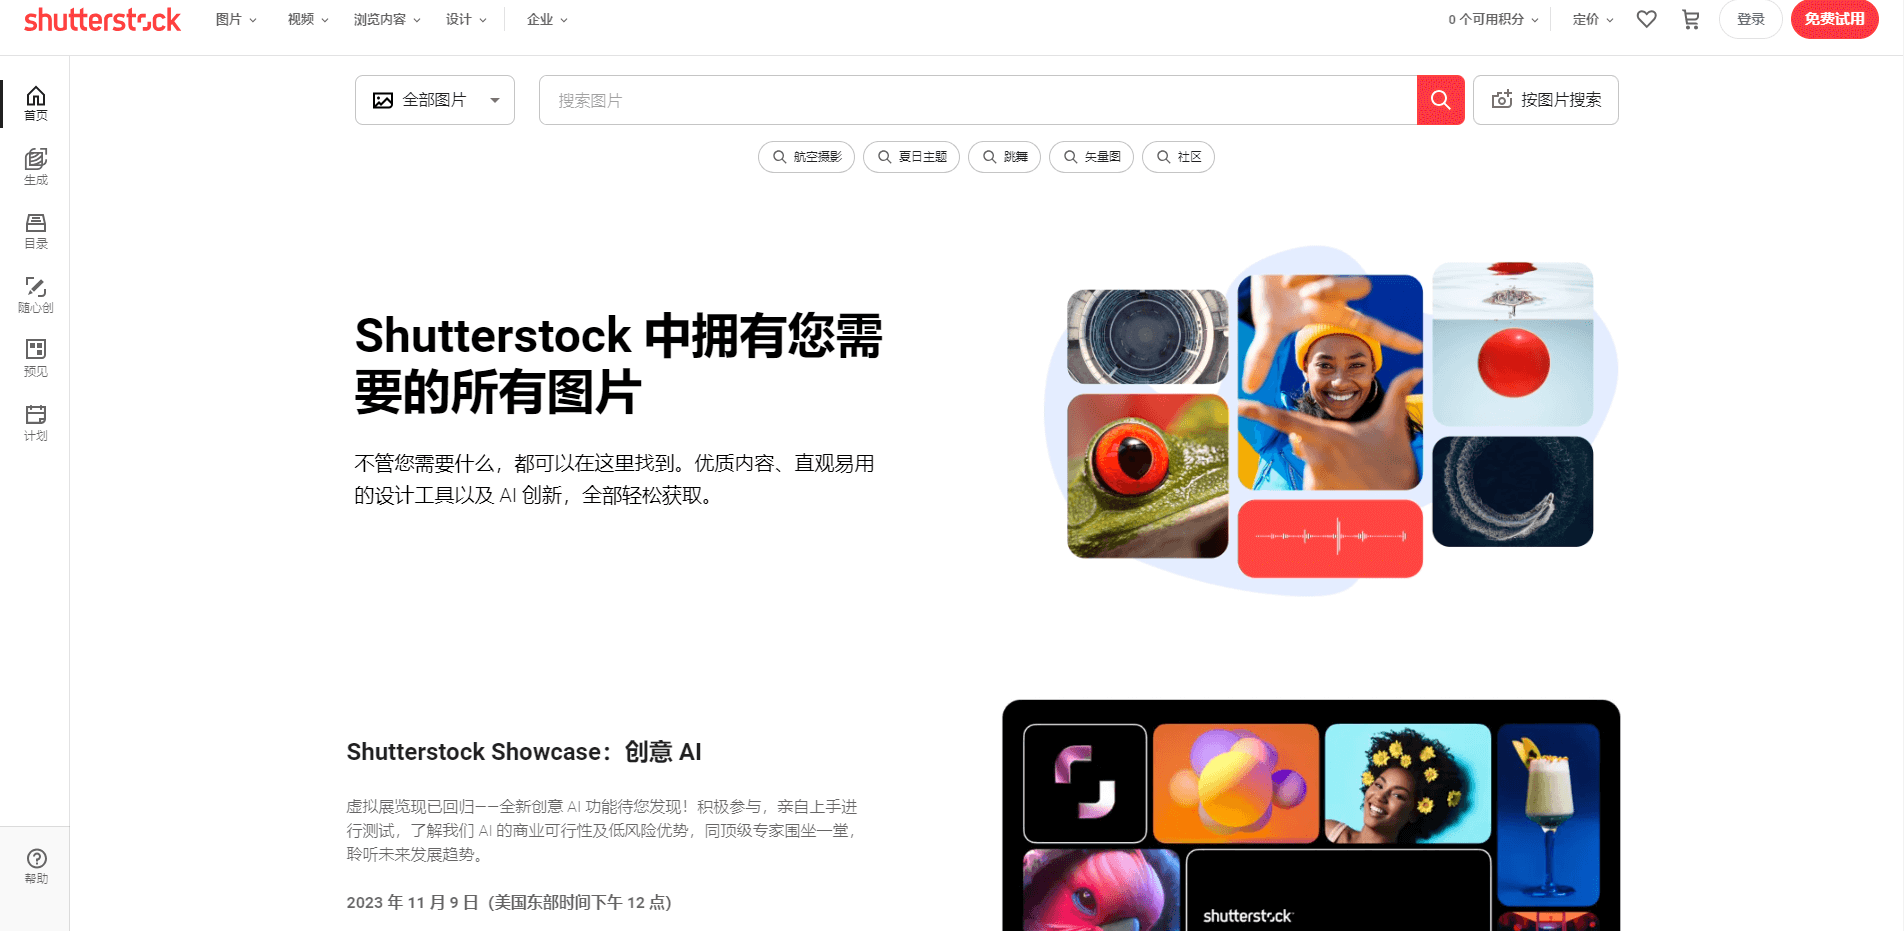 平面设计网站Shutterstock